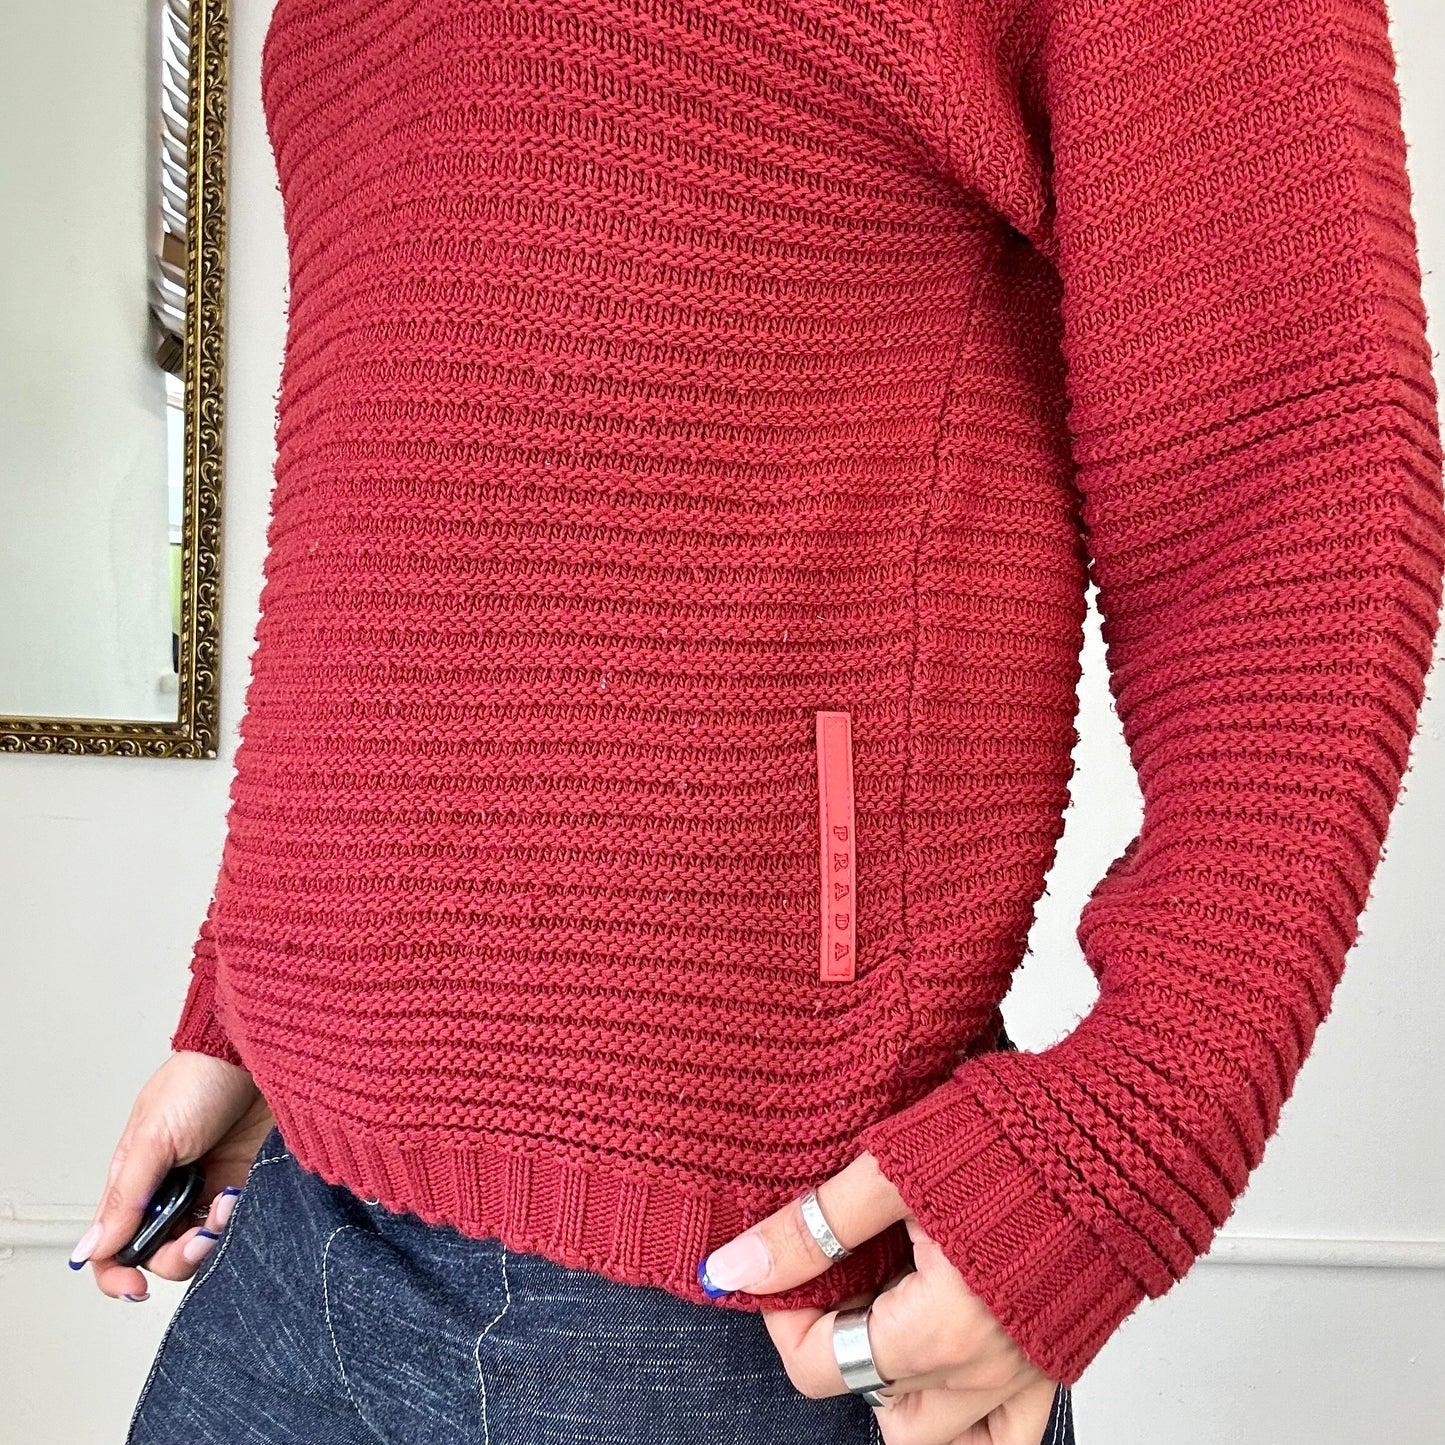 prada red chunky roll kneck knitt jumper